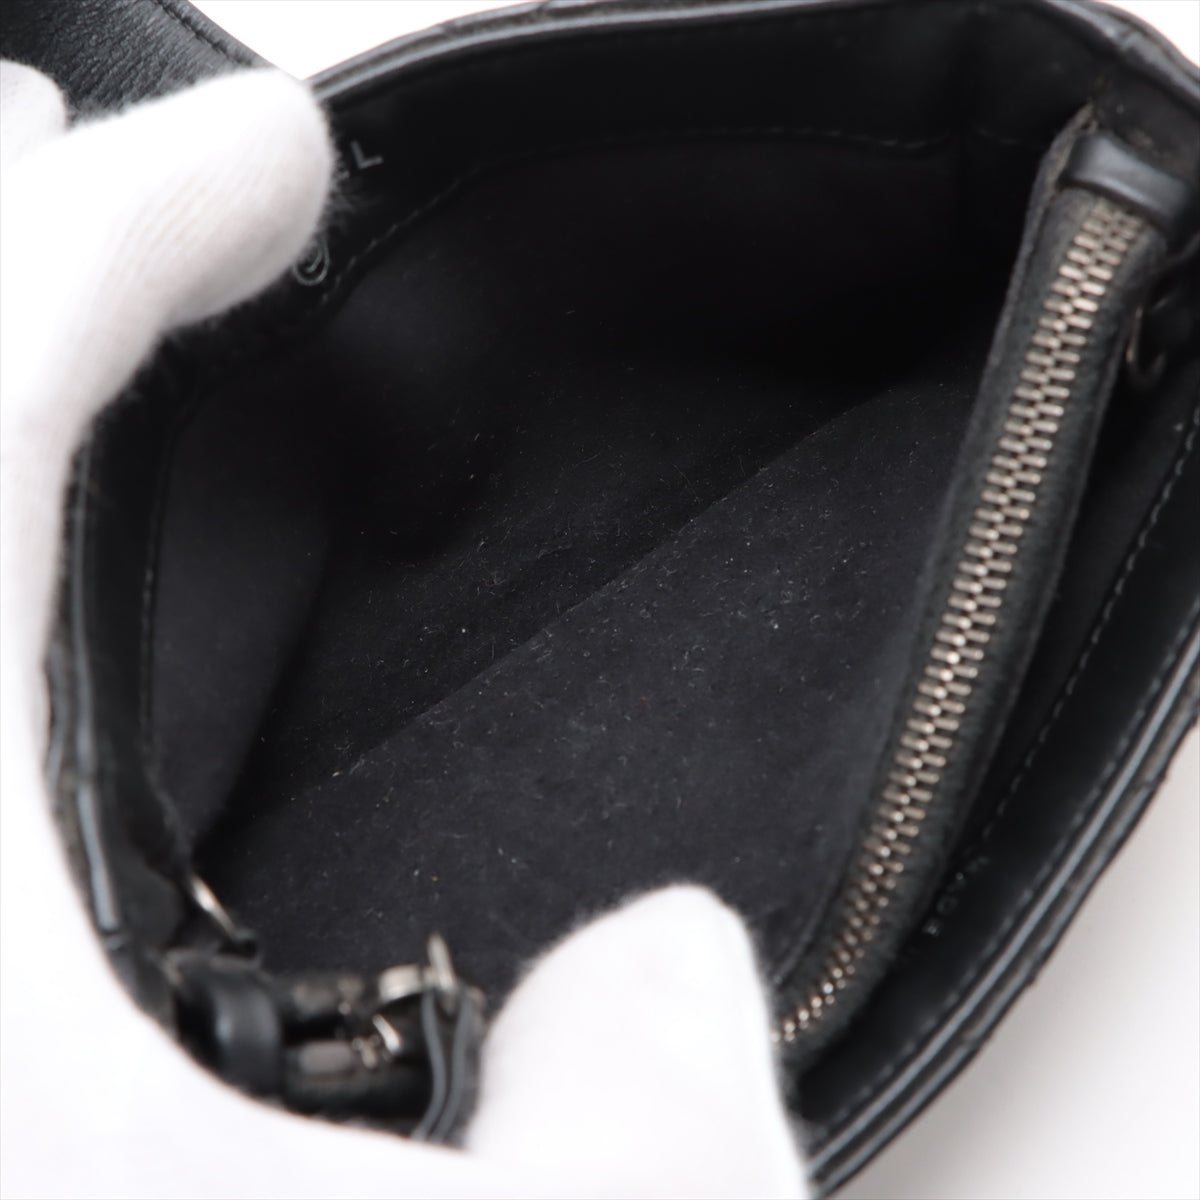 Chanel Matrasse Leather Chain Shoulder Bag Black Silver Gold  20th